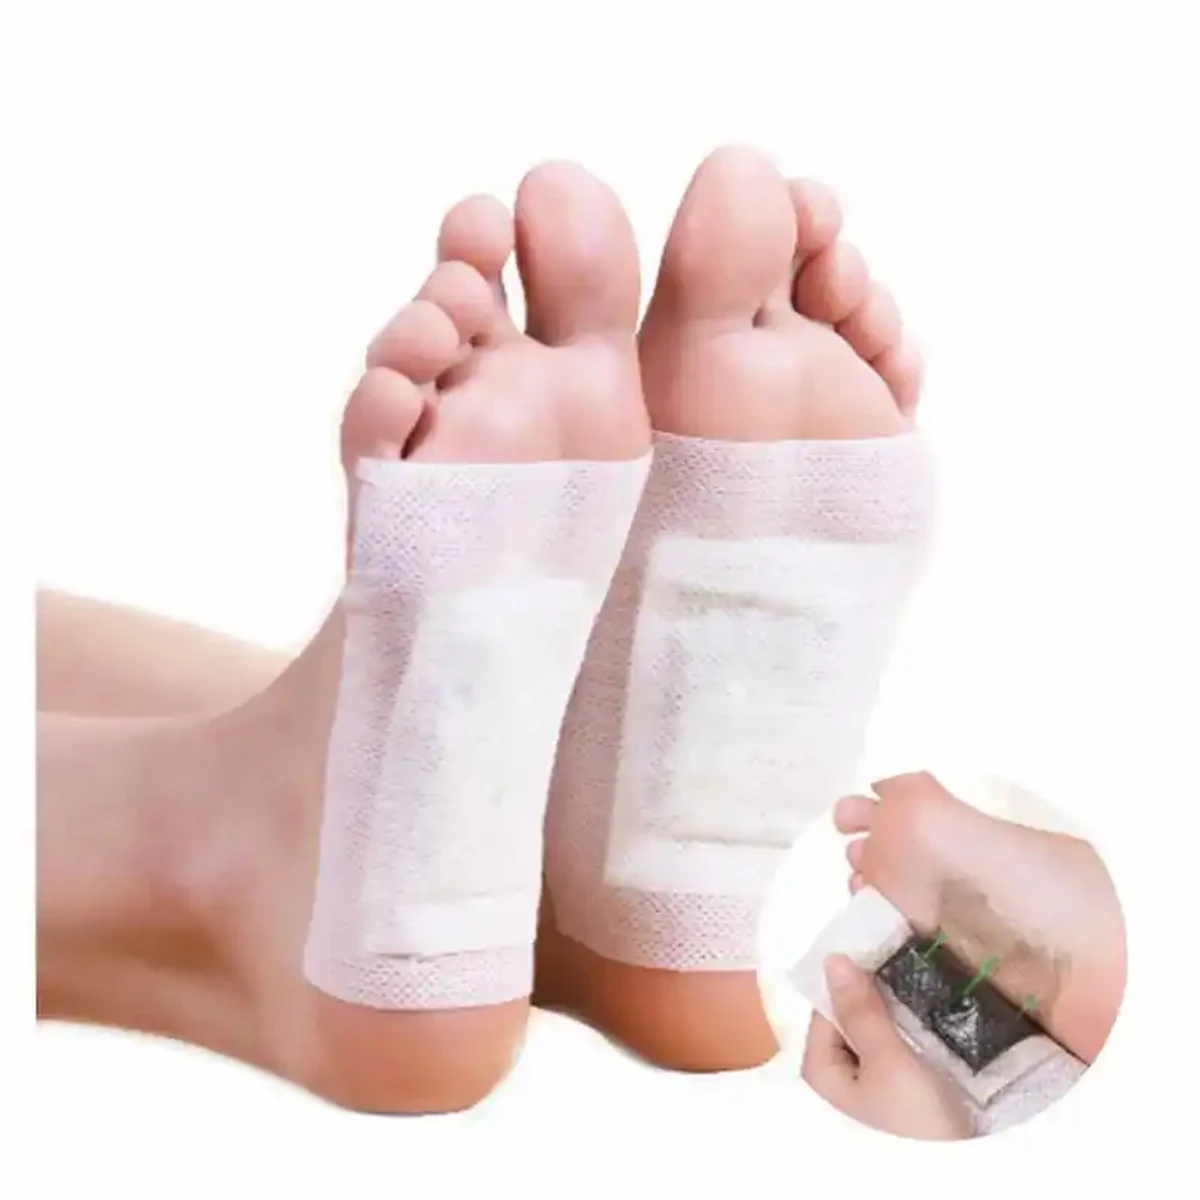 kinoki detox foot pad 10 picas